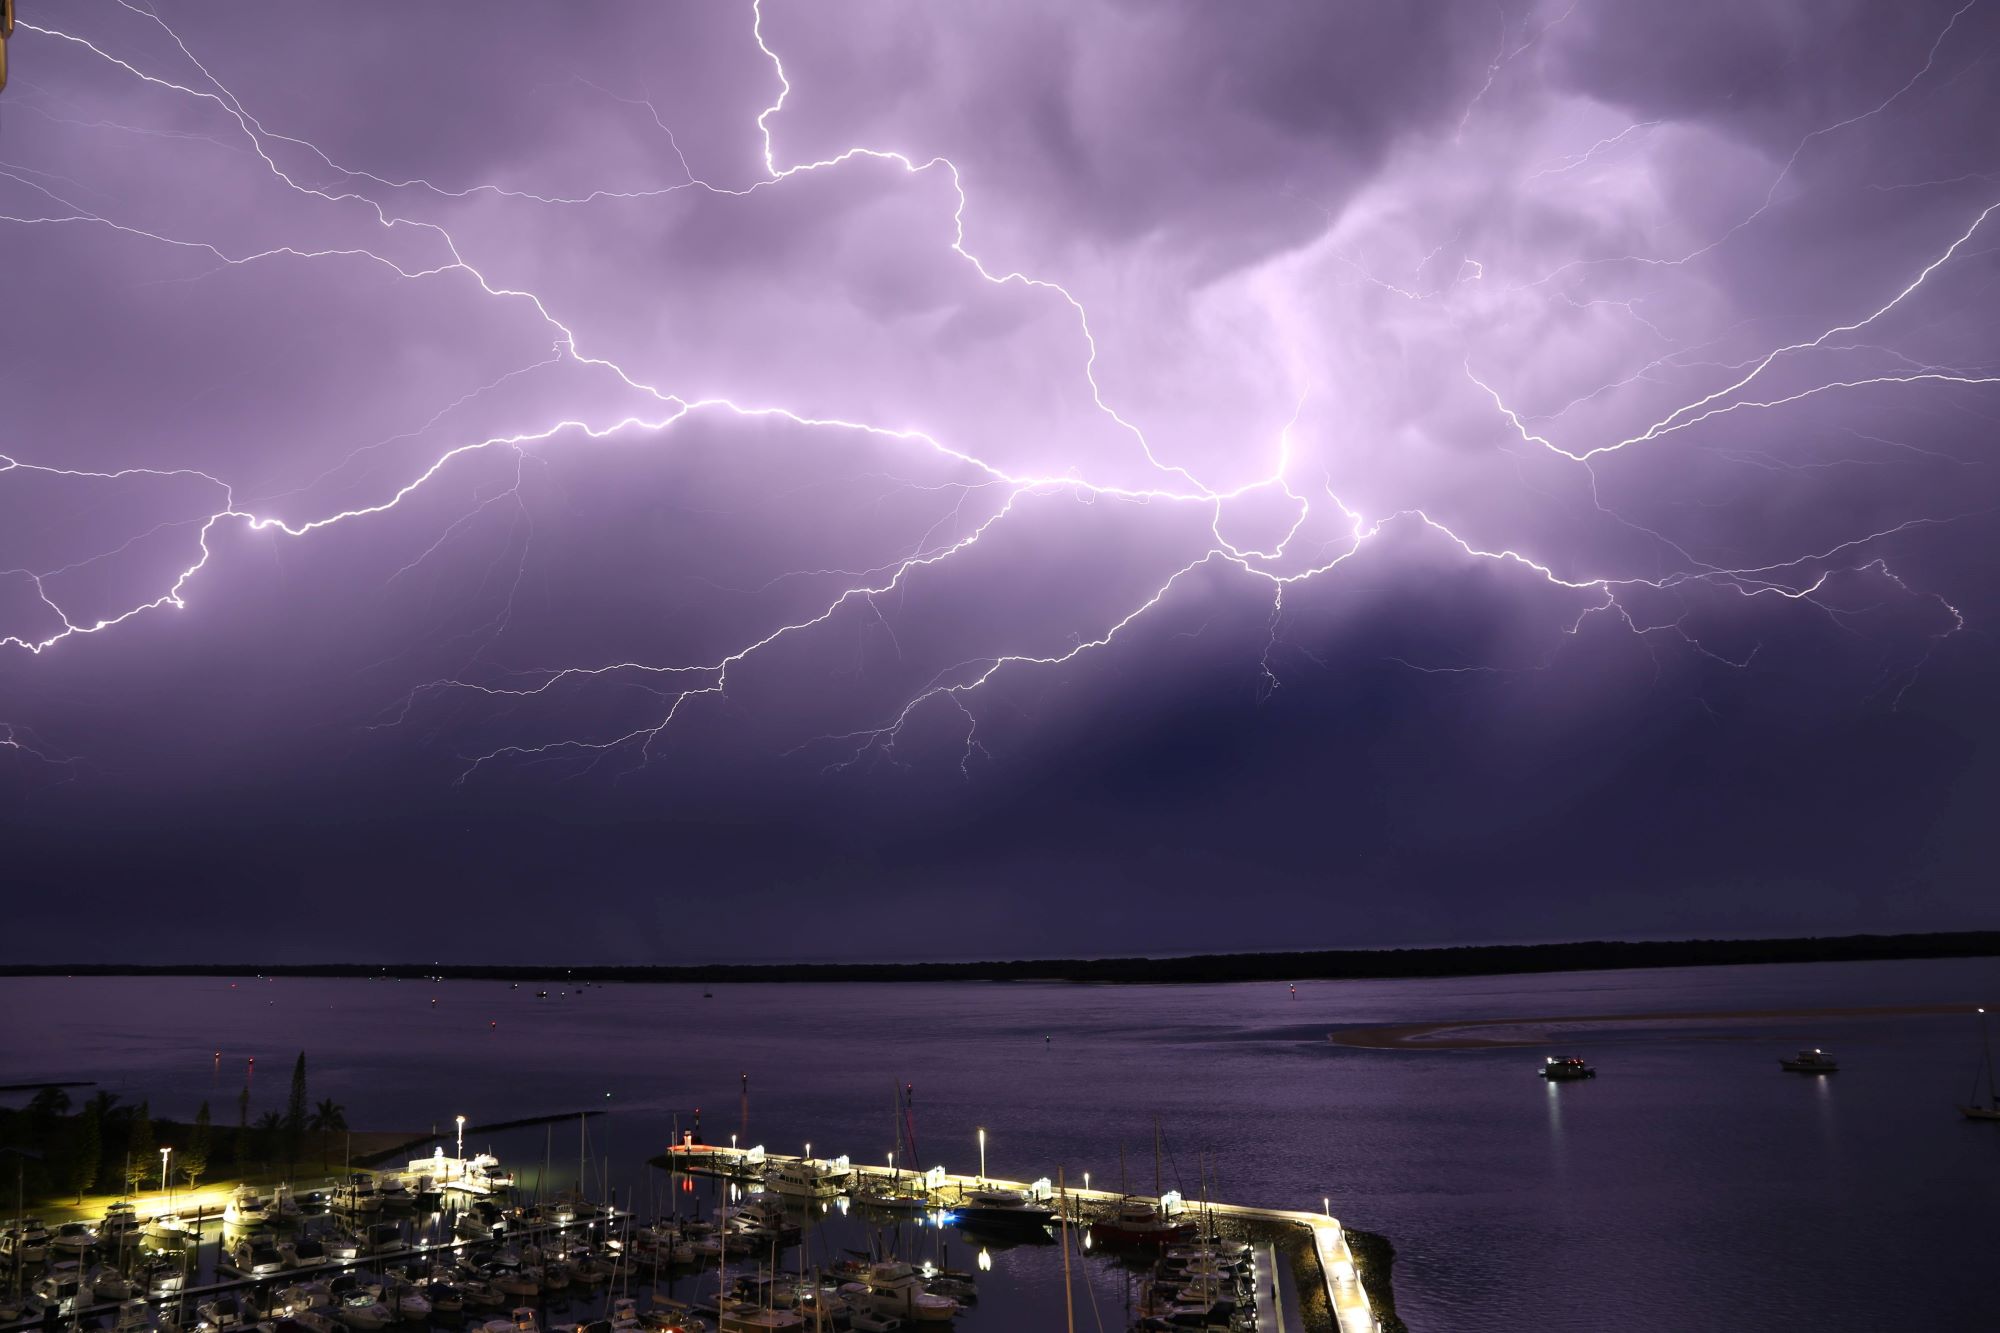 Lightning strike in purple sky over marina